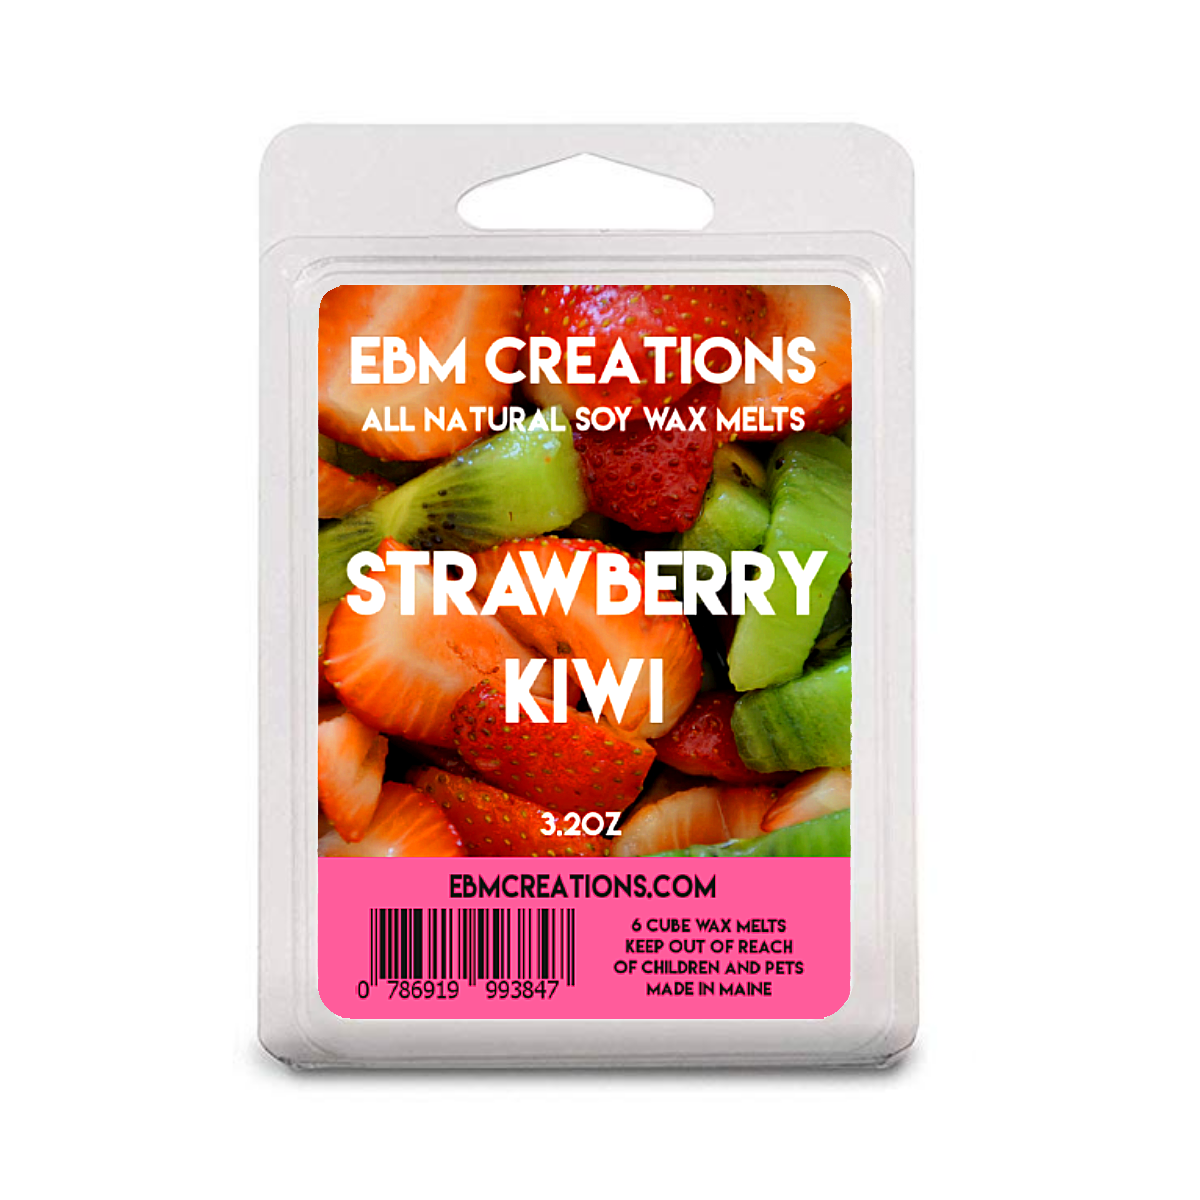 Strawberry Kiwi - 3.2 oz Clamshell